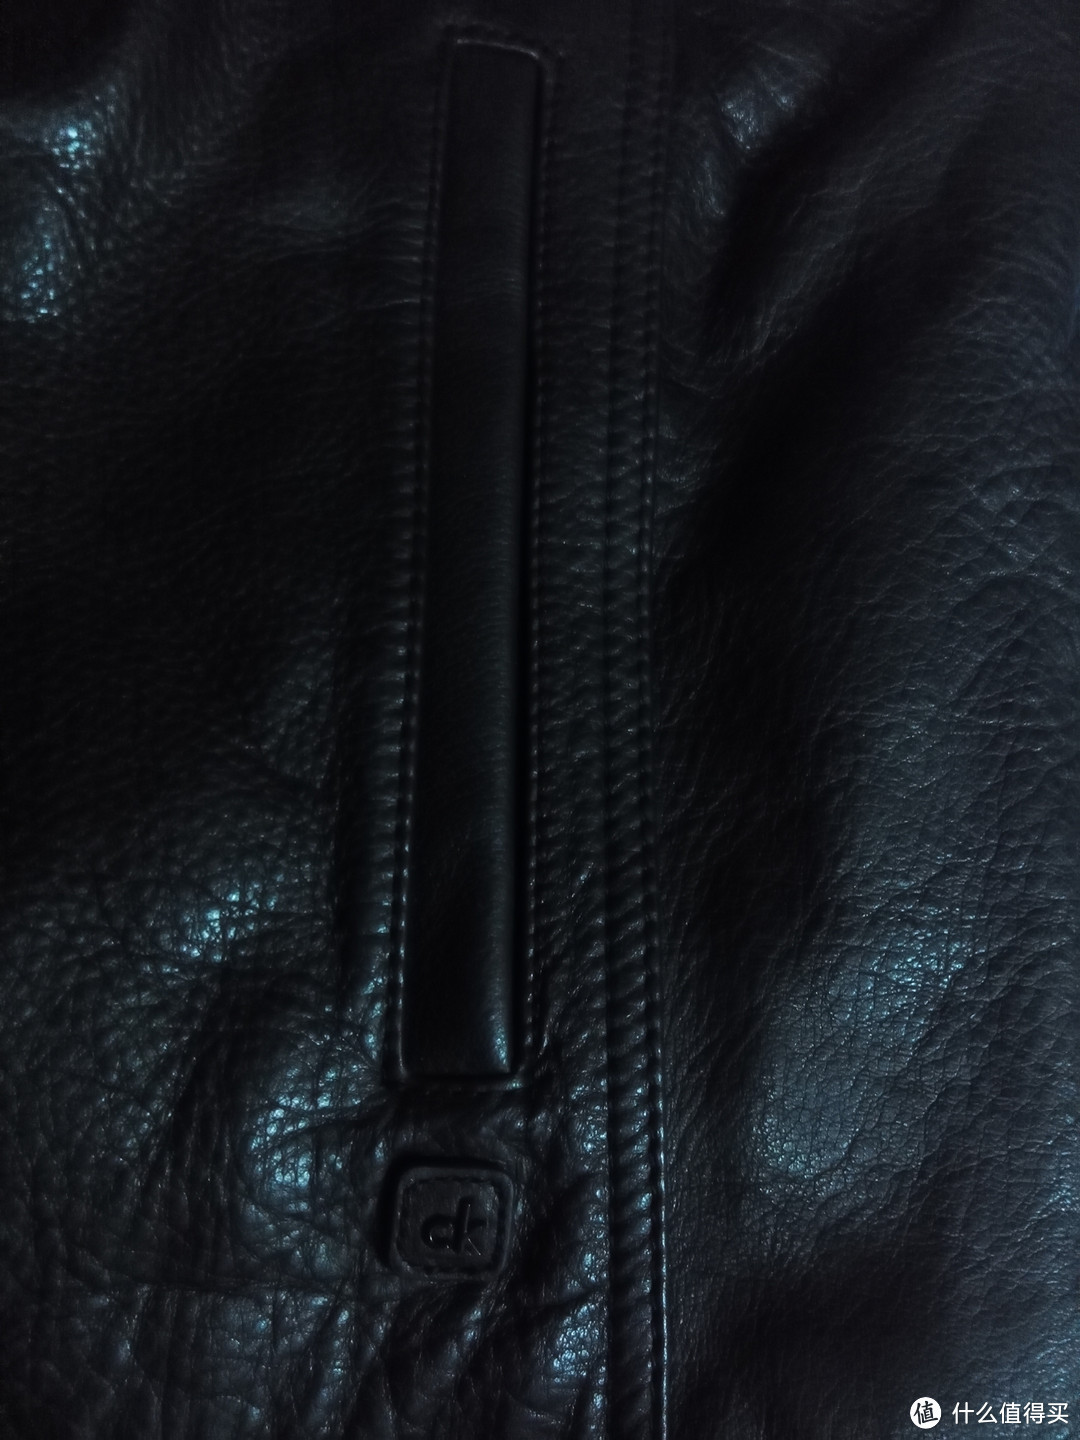 Calvin Klein Leather Jacket 男士皮夹克